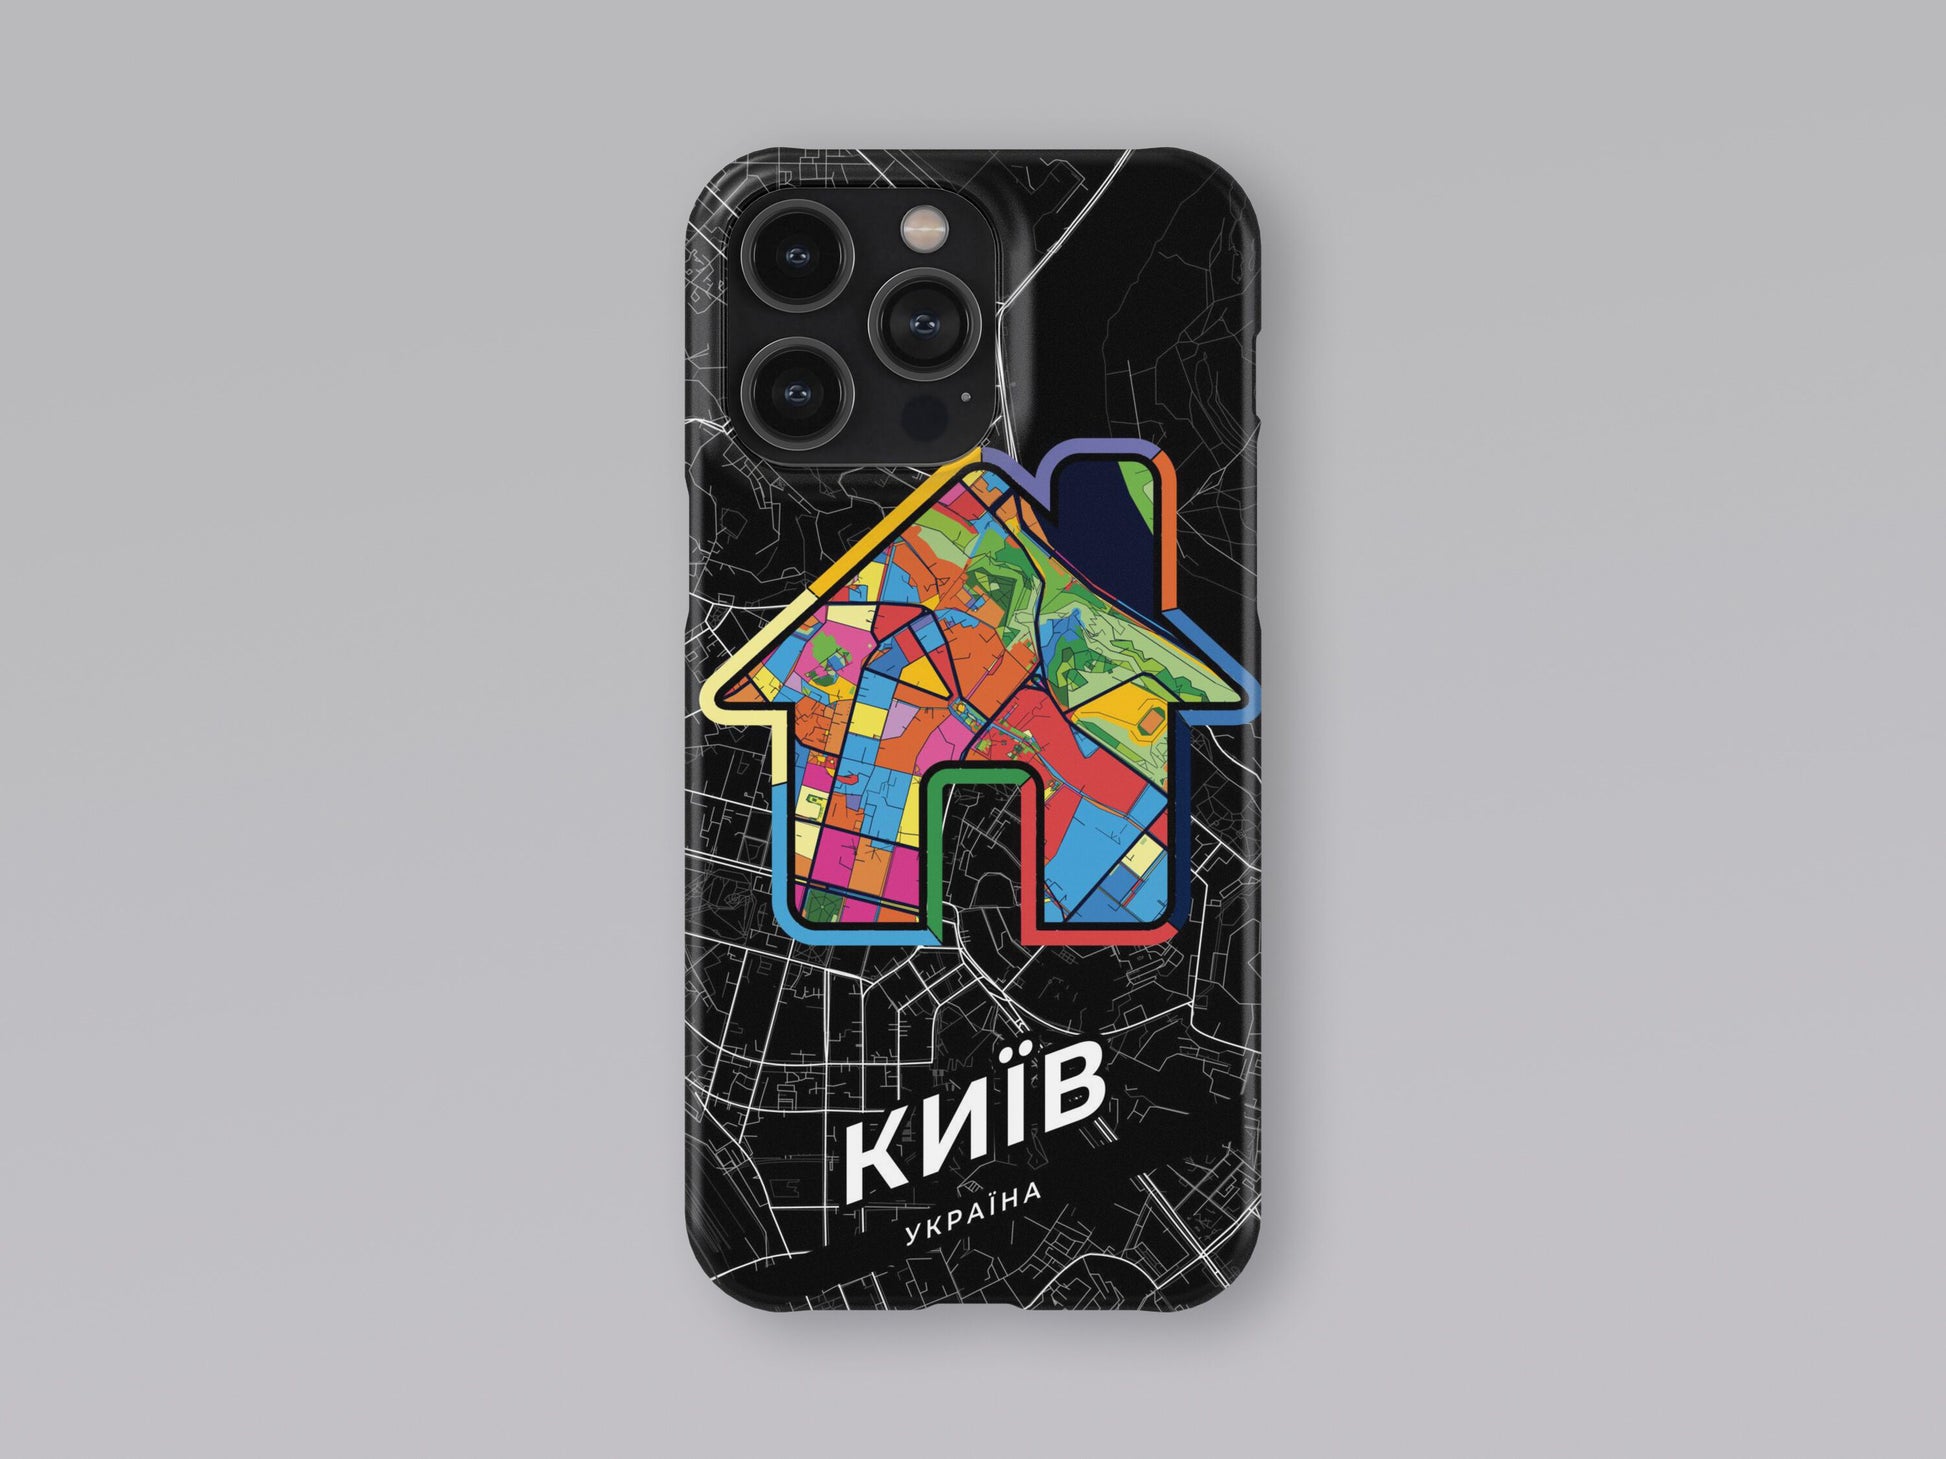 Kiev Ukraine slim phone case with colorful icon. Birthday, wedding or housewarming gift. Couple match cases. 3